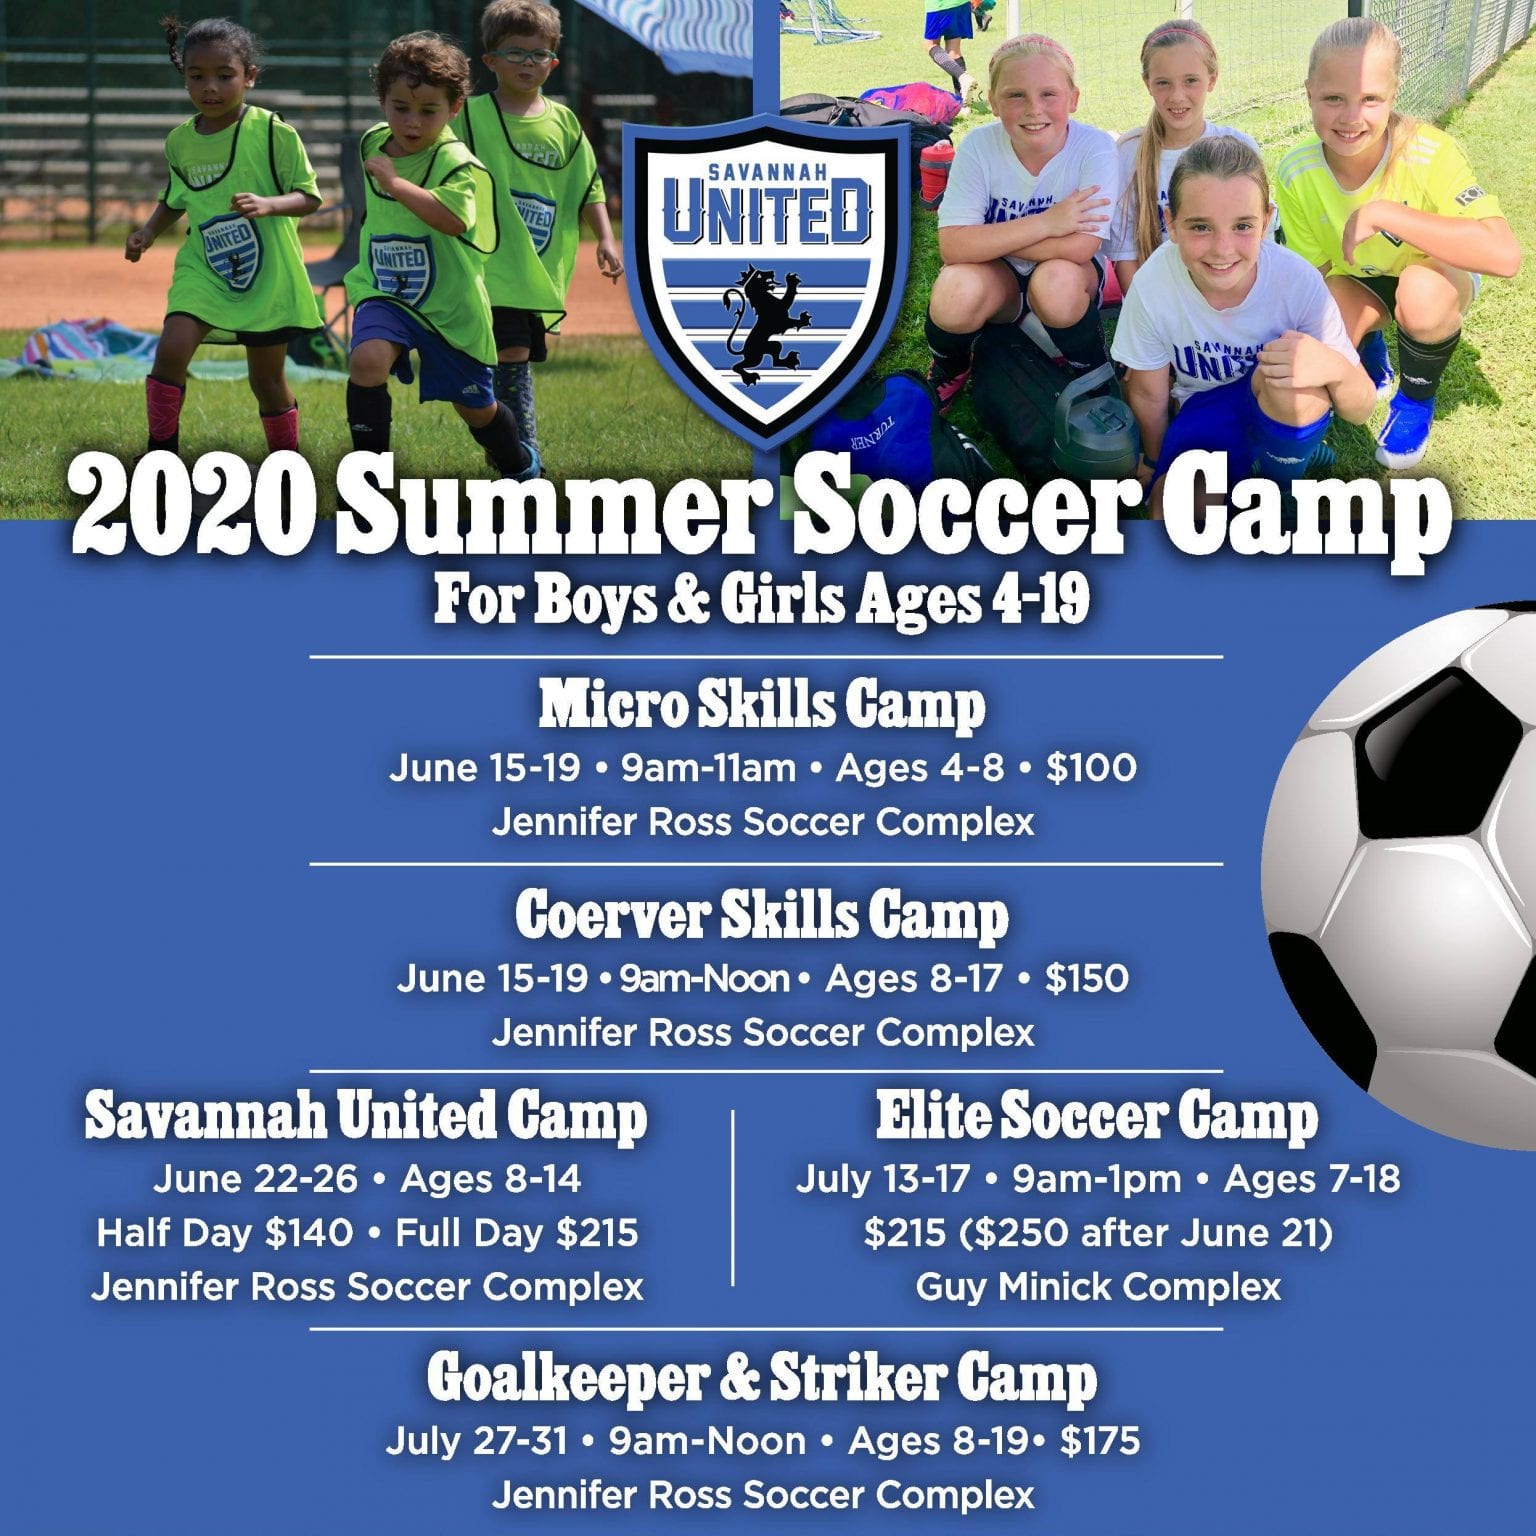 2020 Summer Soccer Camp - Savannah United